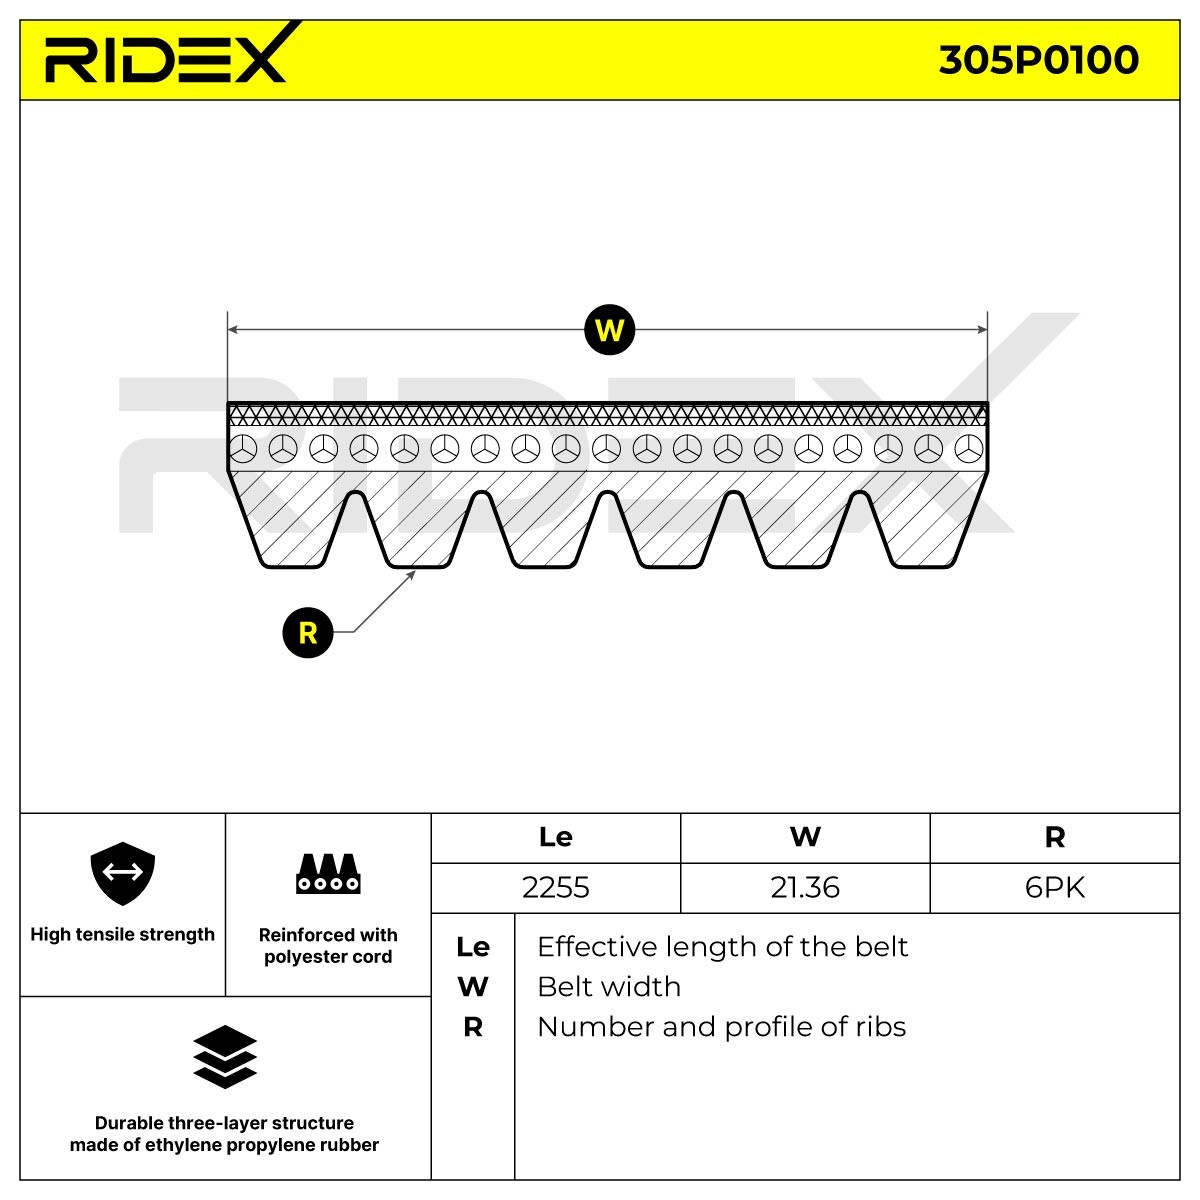 305P0100 Ribbed belt 305P0100 RIDEX 2255mm, 6, EPDM (ethylene propylene diene Monomer (M-class) rubber), Polyester